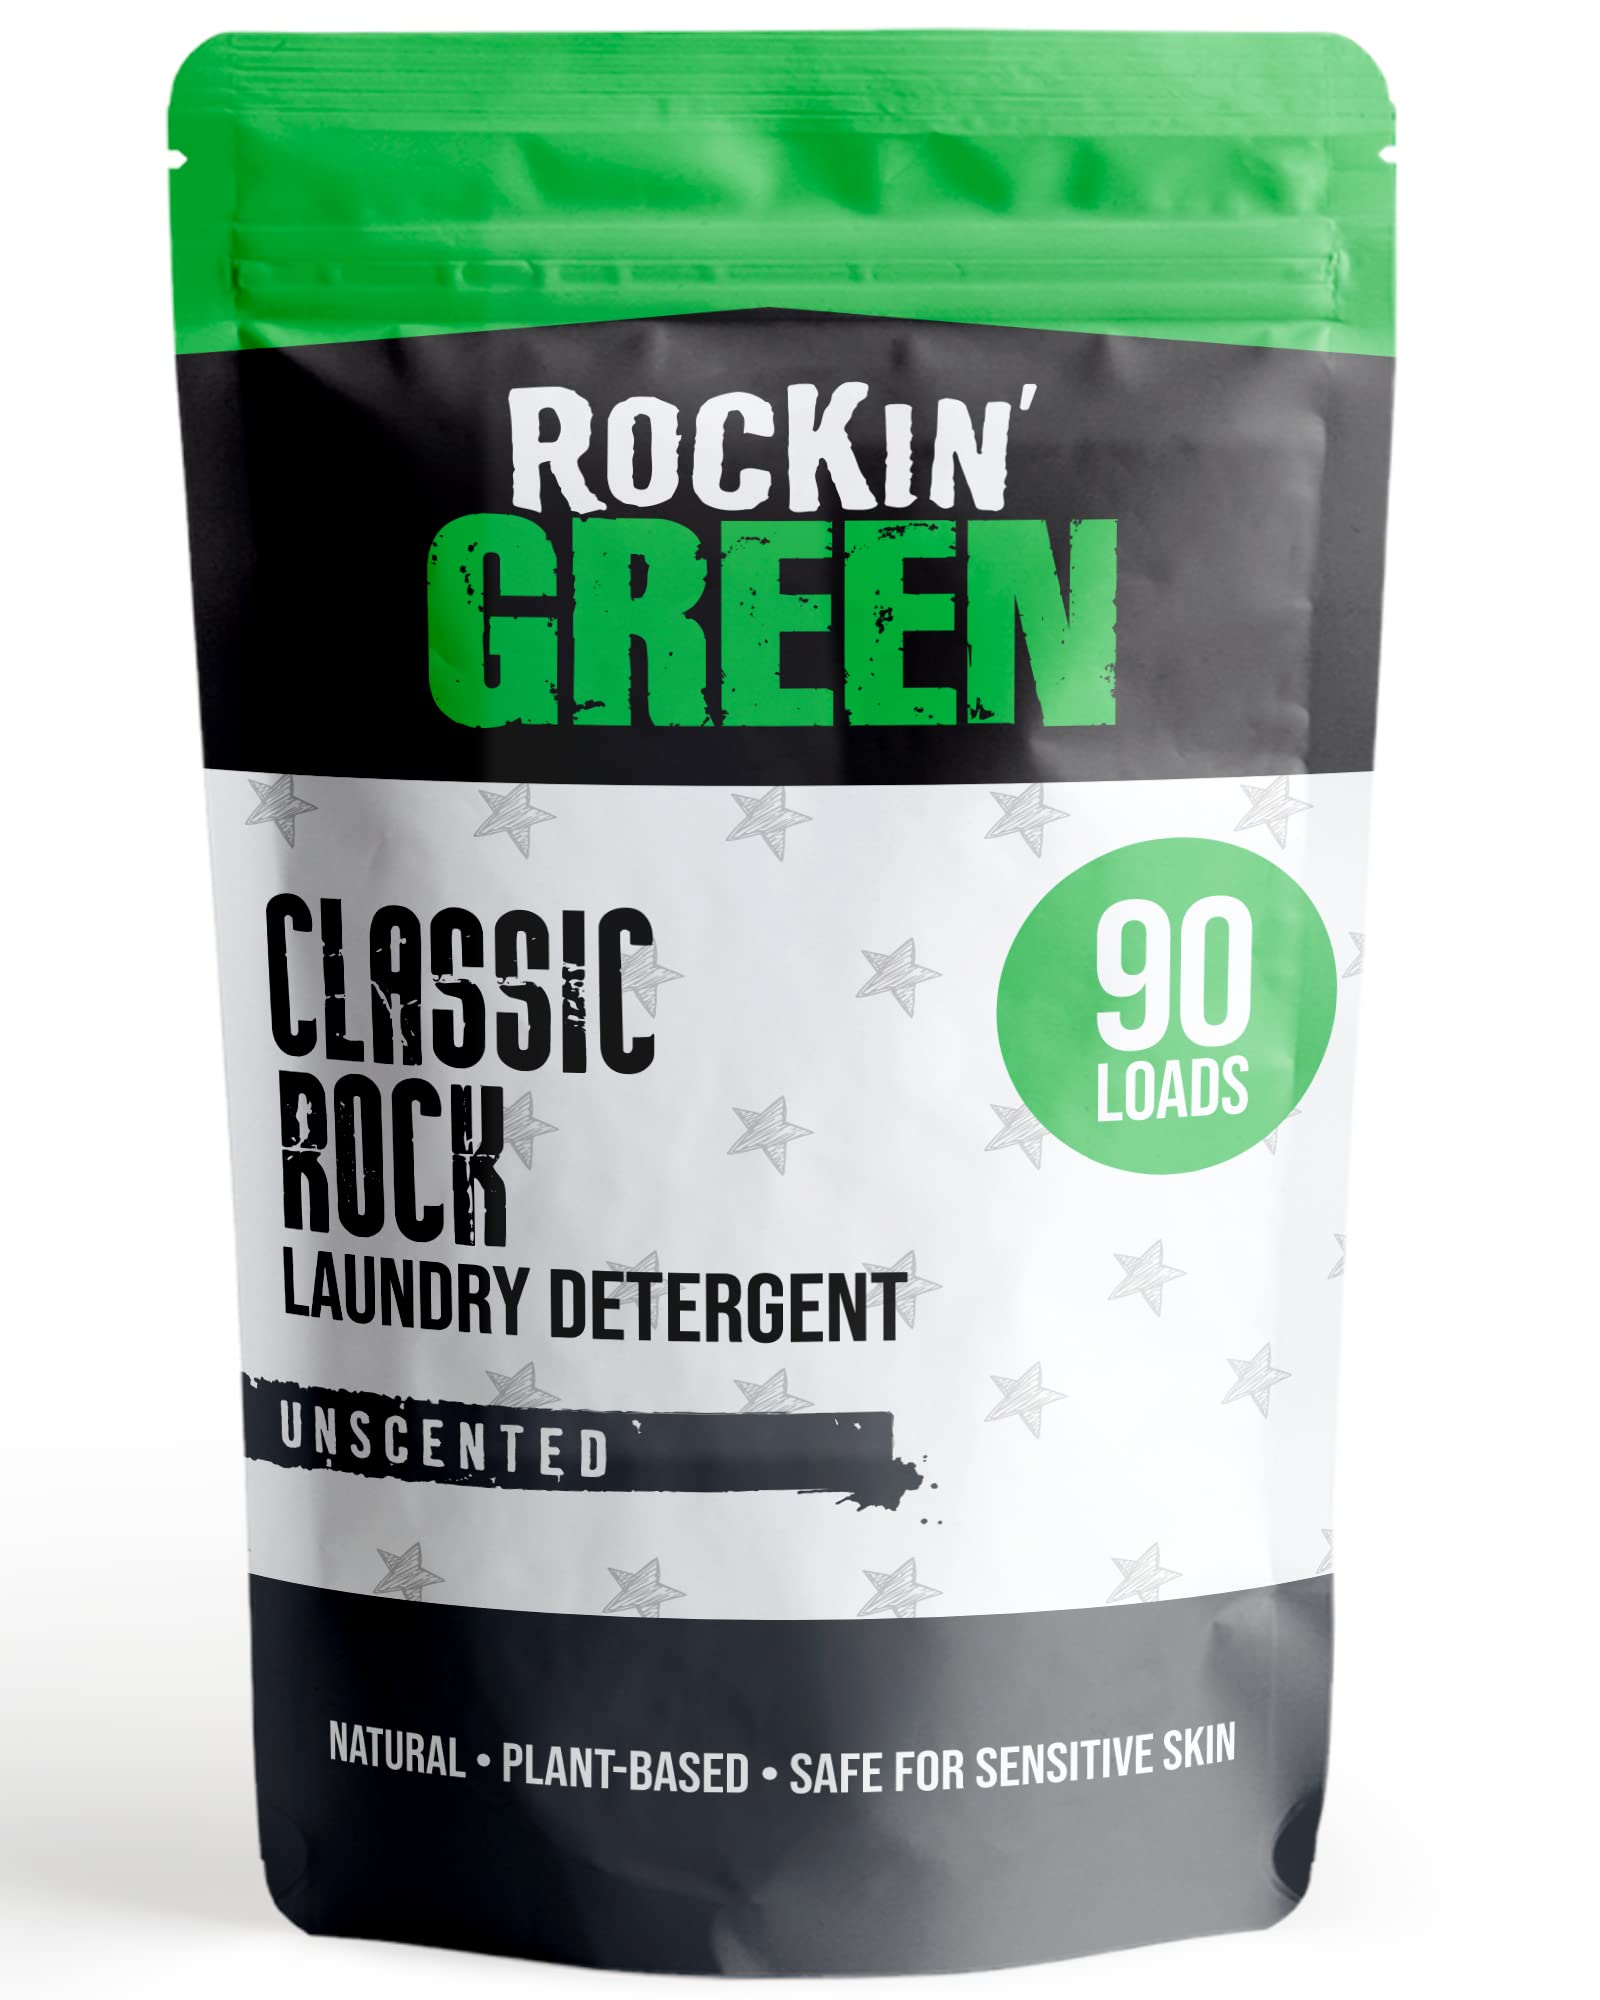 Rockin' Green Classic Rock Laundry Detergent (90 Loads), Plant based, All Natural Laundry Detergent Powder, Vegan and Biodegradable Odor Fighter, Safe for Sensitive Skin, 45 oz (Unscented).